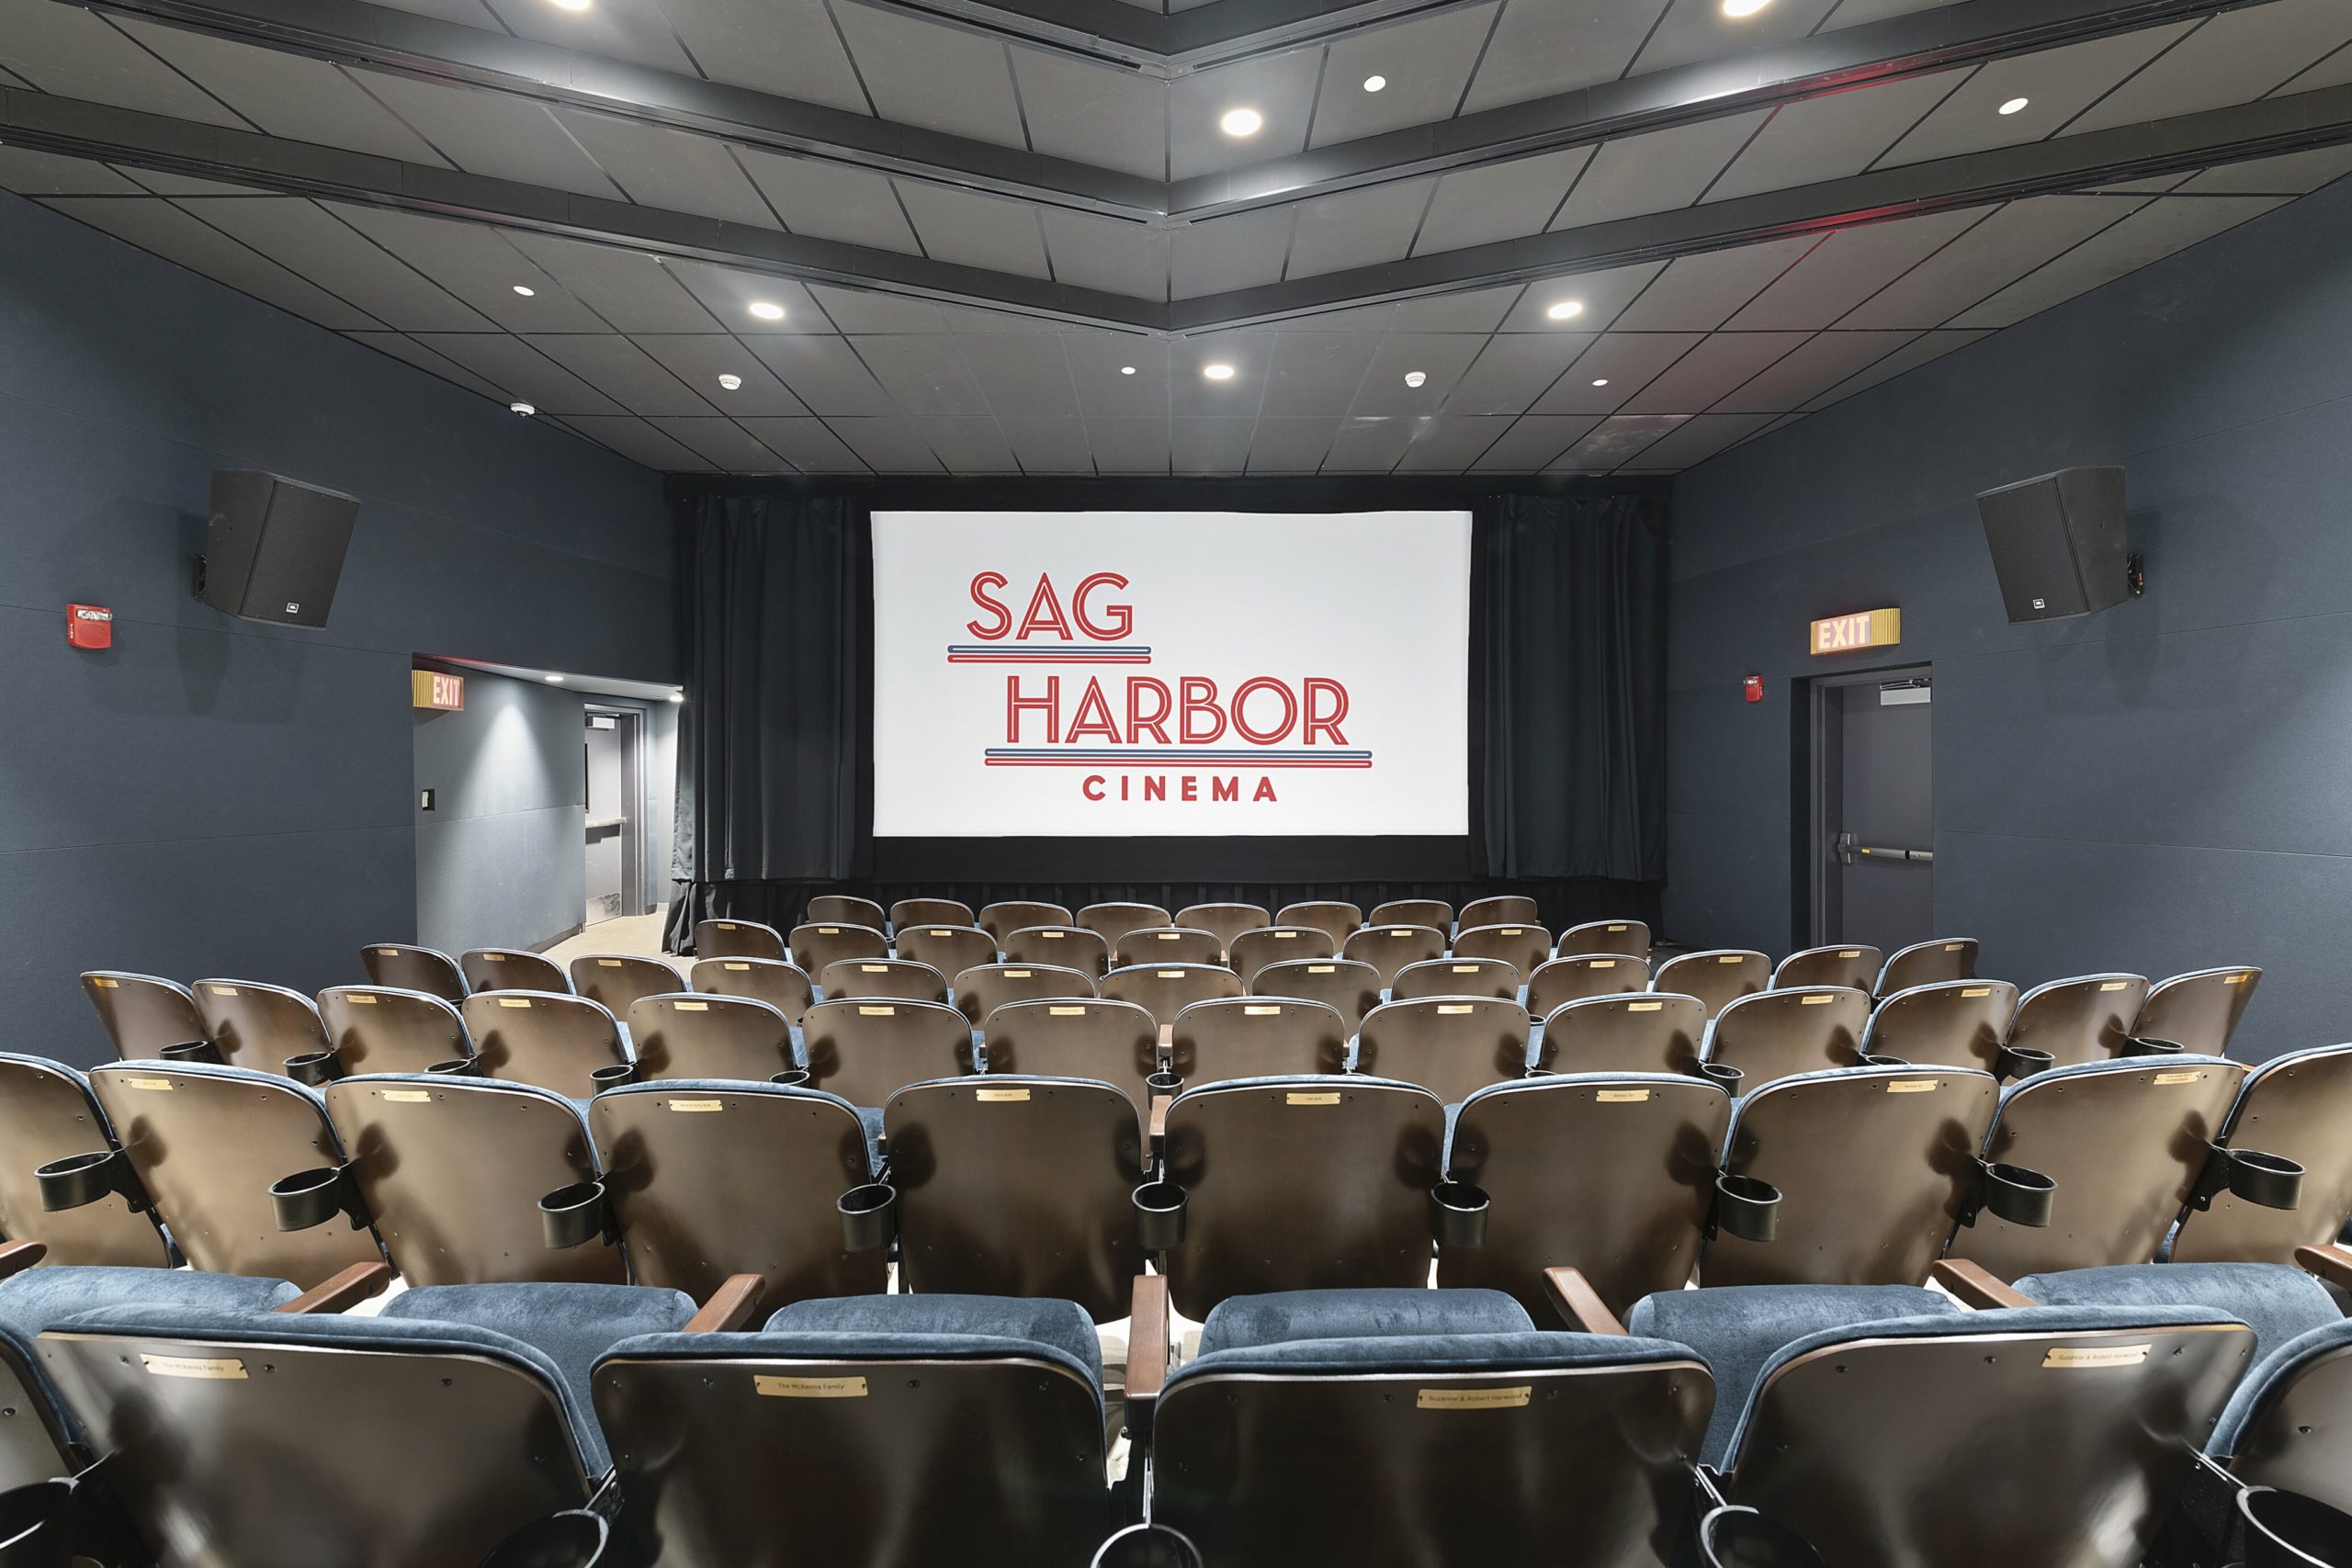 A sneak-peek inside the new Sag Harbor Cinema.